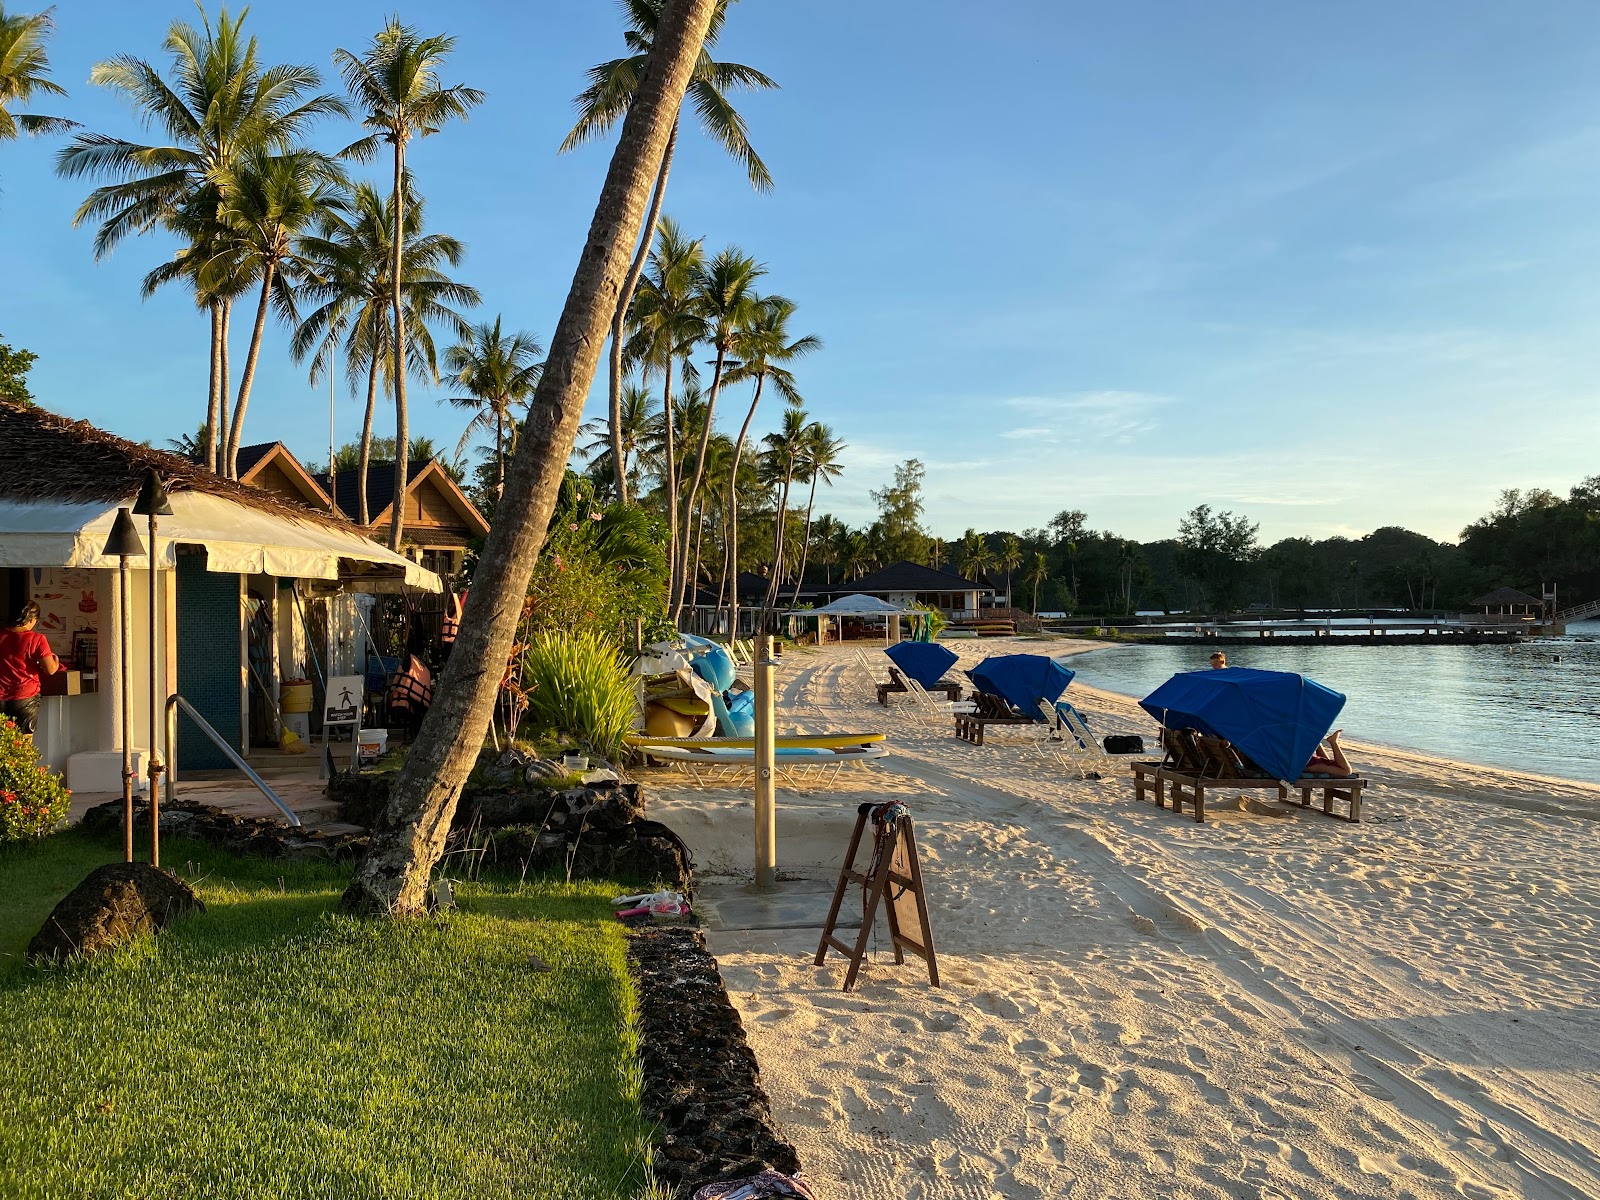 Foto de Palau Pacific Resort - lugar popular entre os apreciadores de relaxamento